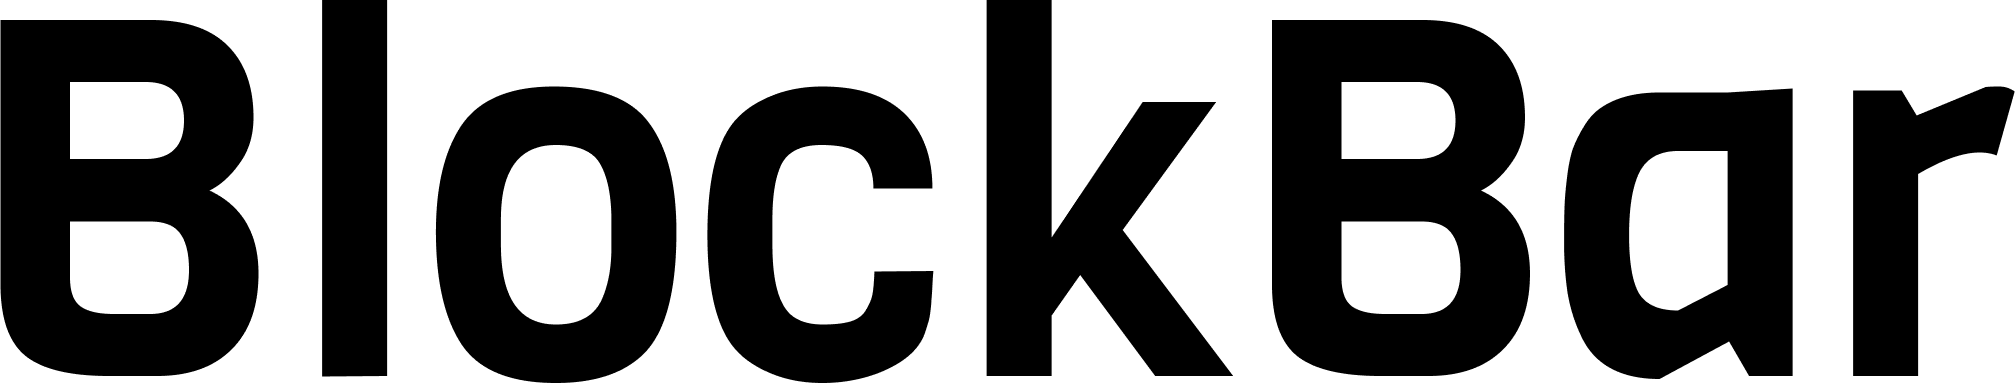 BlockBar logo in black